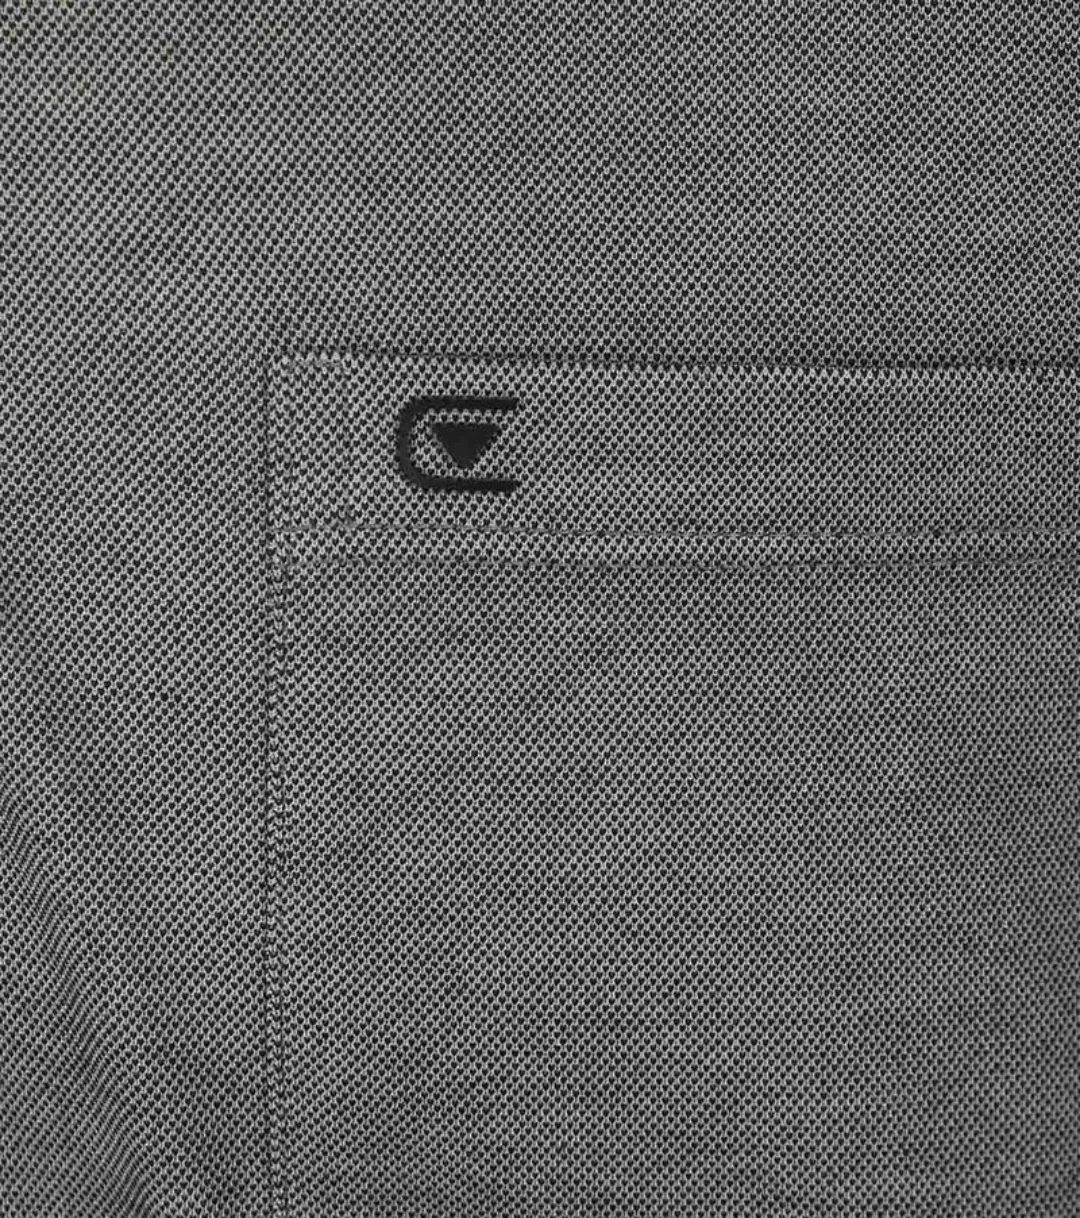 Casa Moda Long Sleeve Poloshirt Grau - Größe M günstig online kaufen